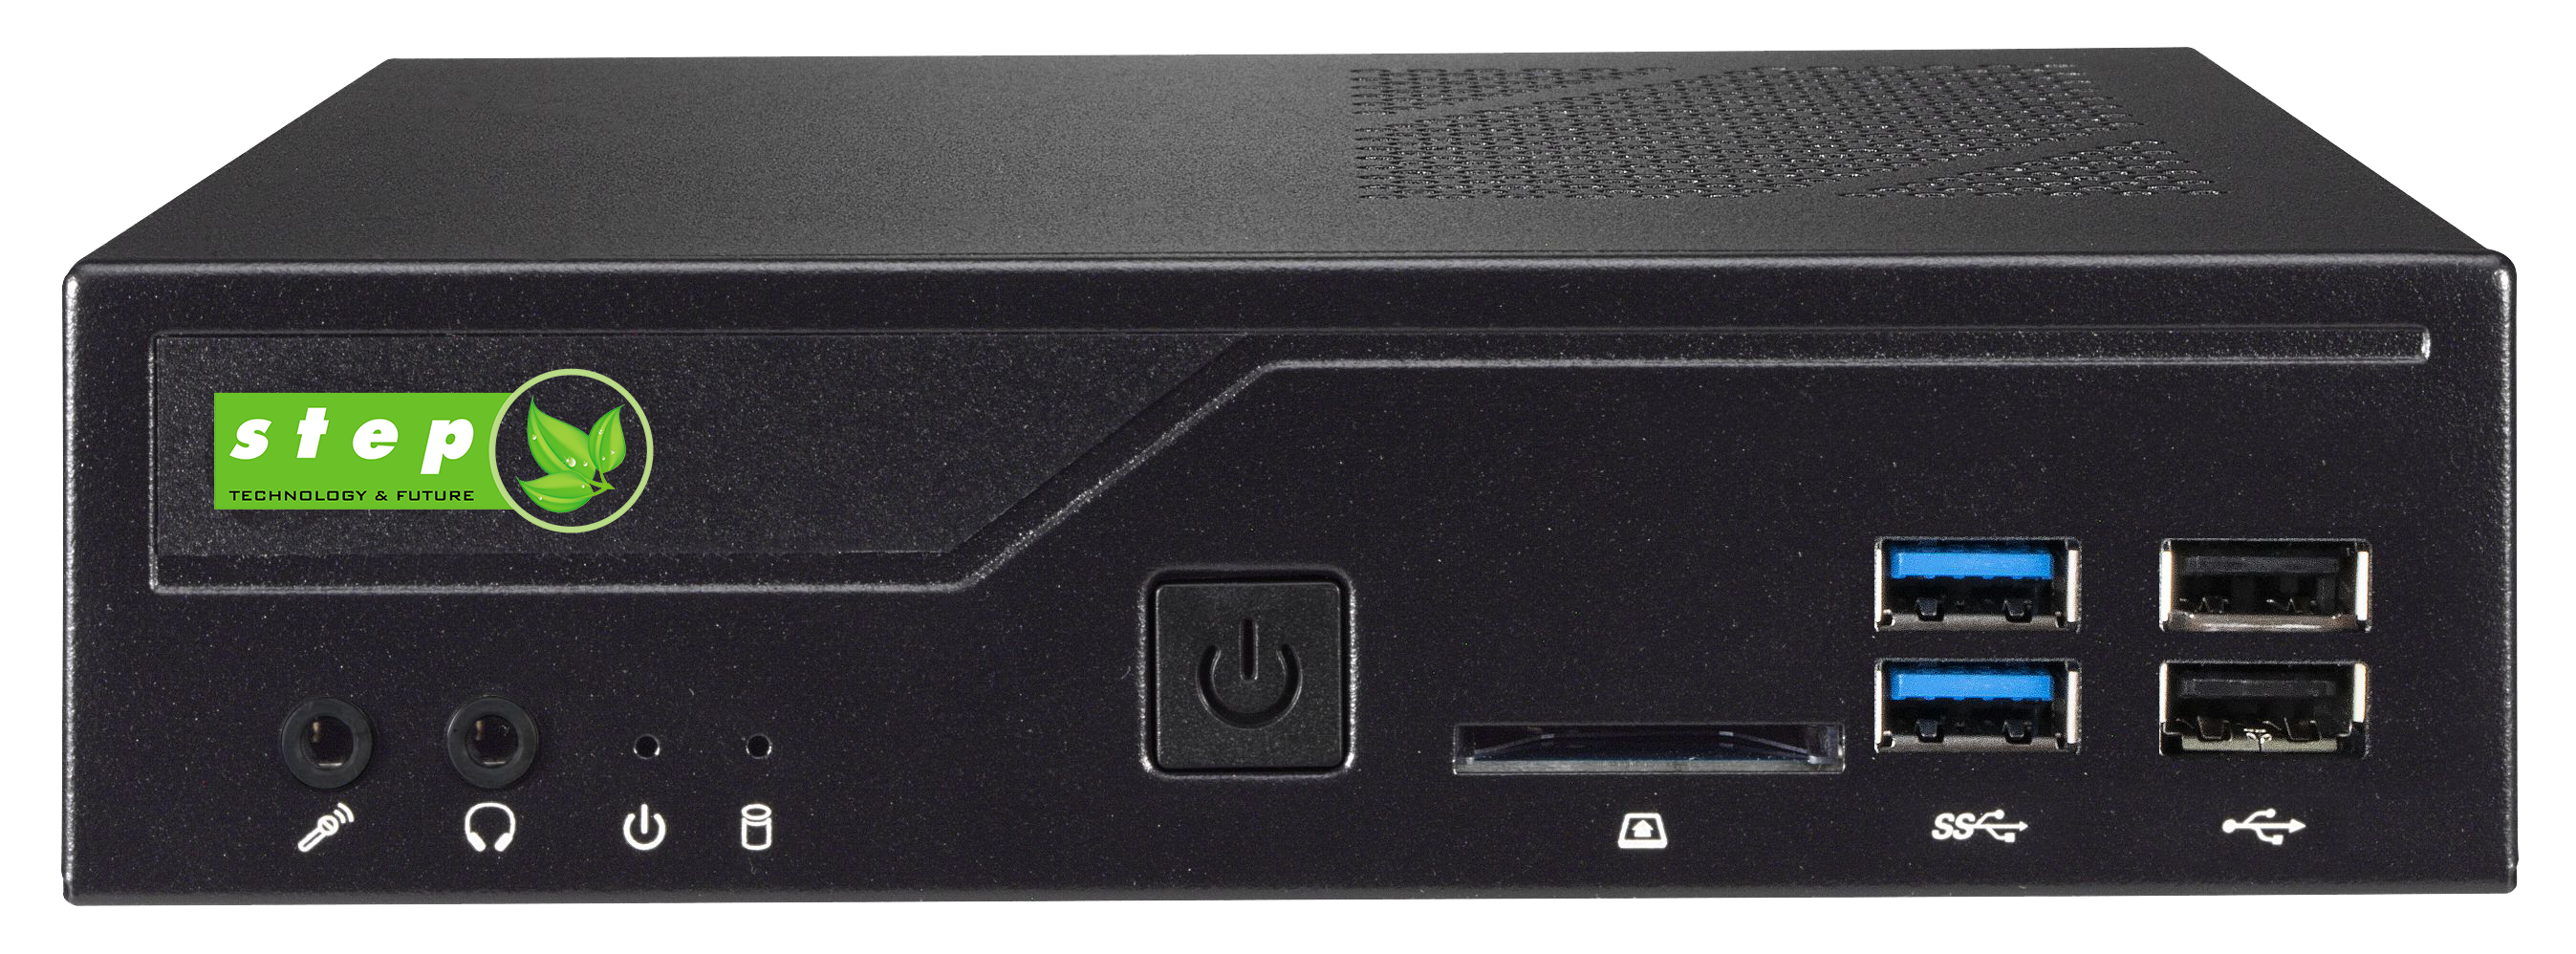 step PC Micro DS6010 Konfigurator